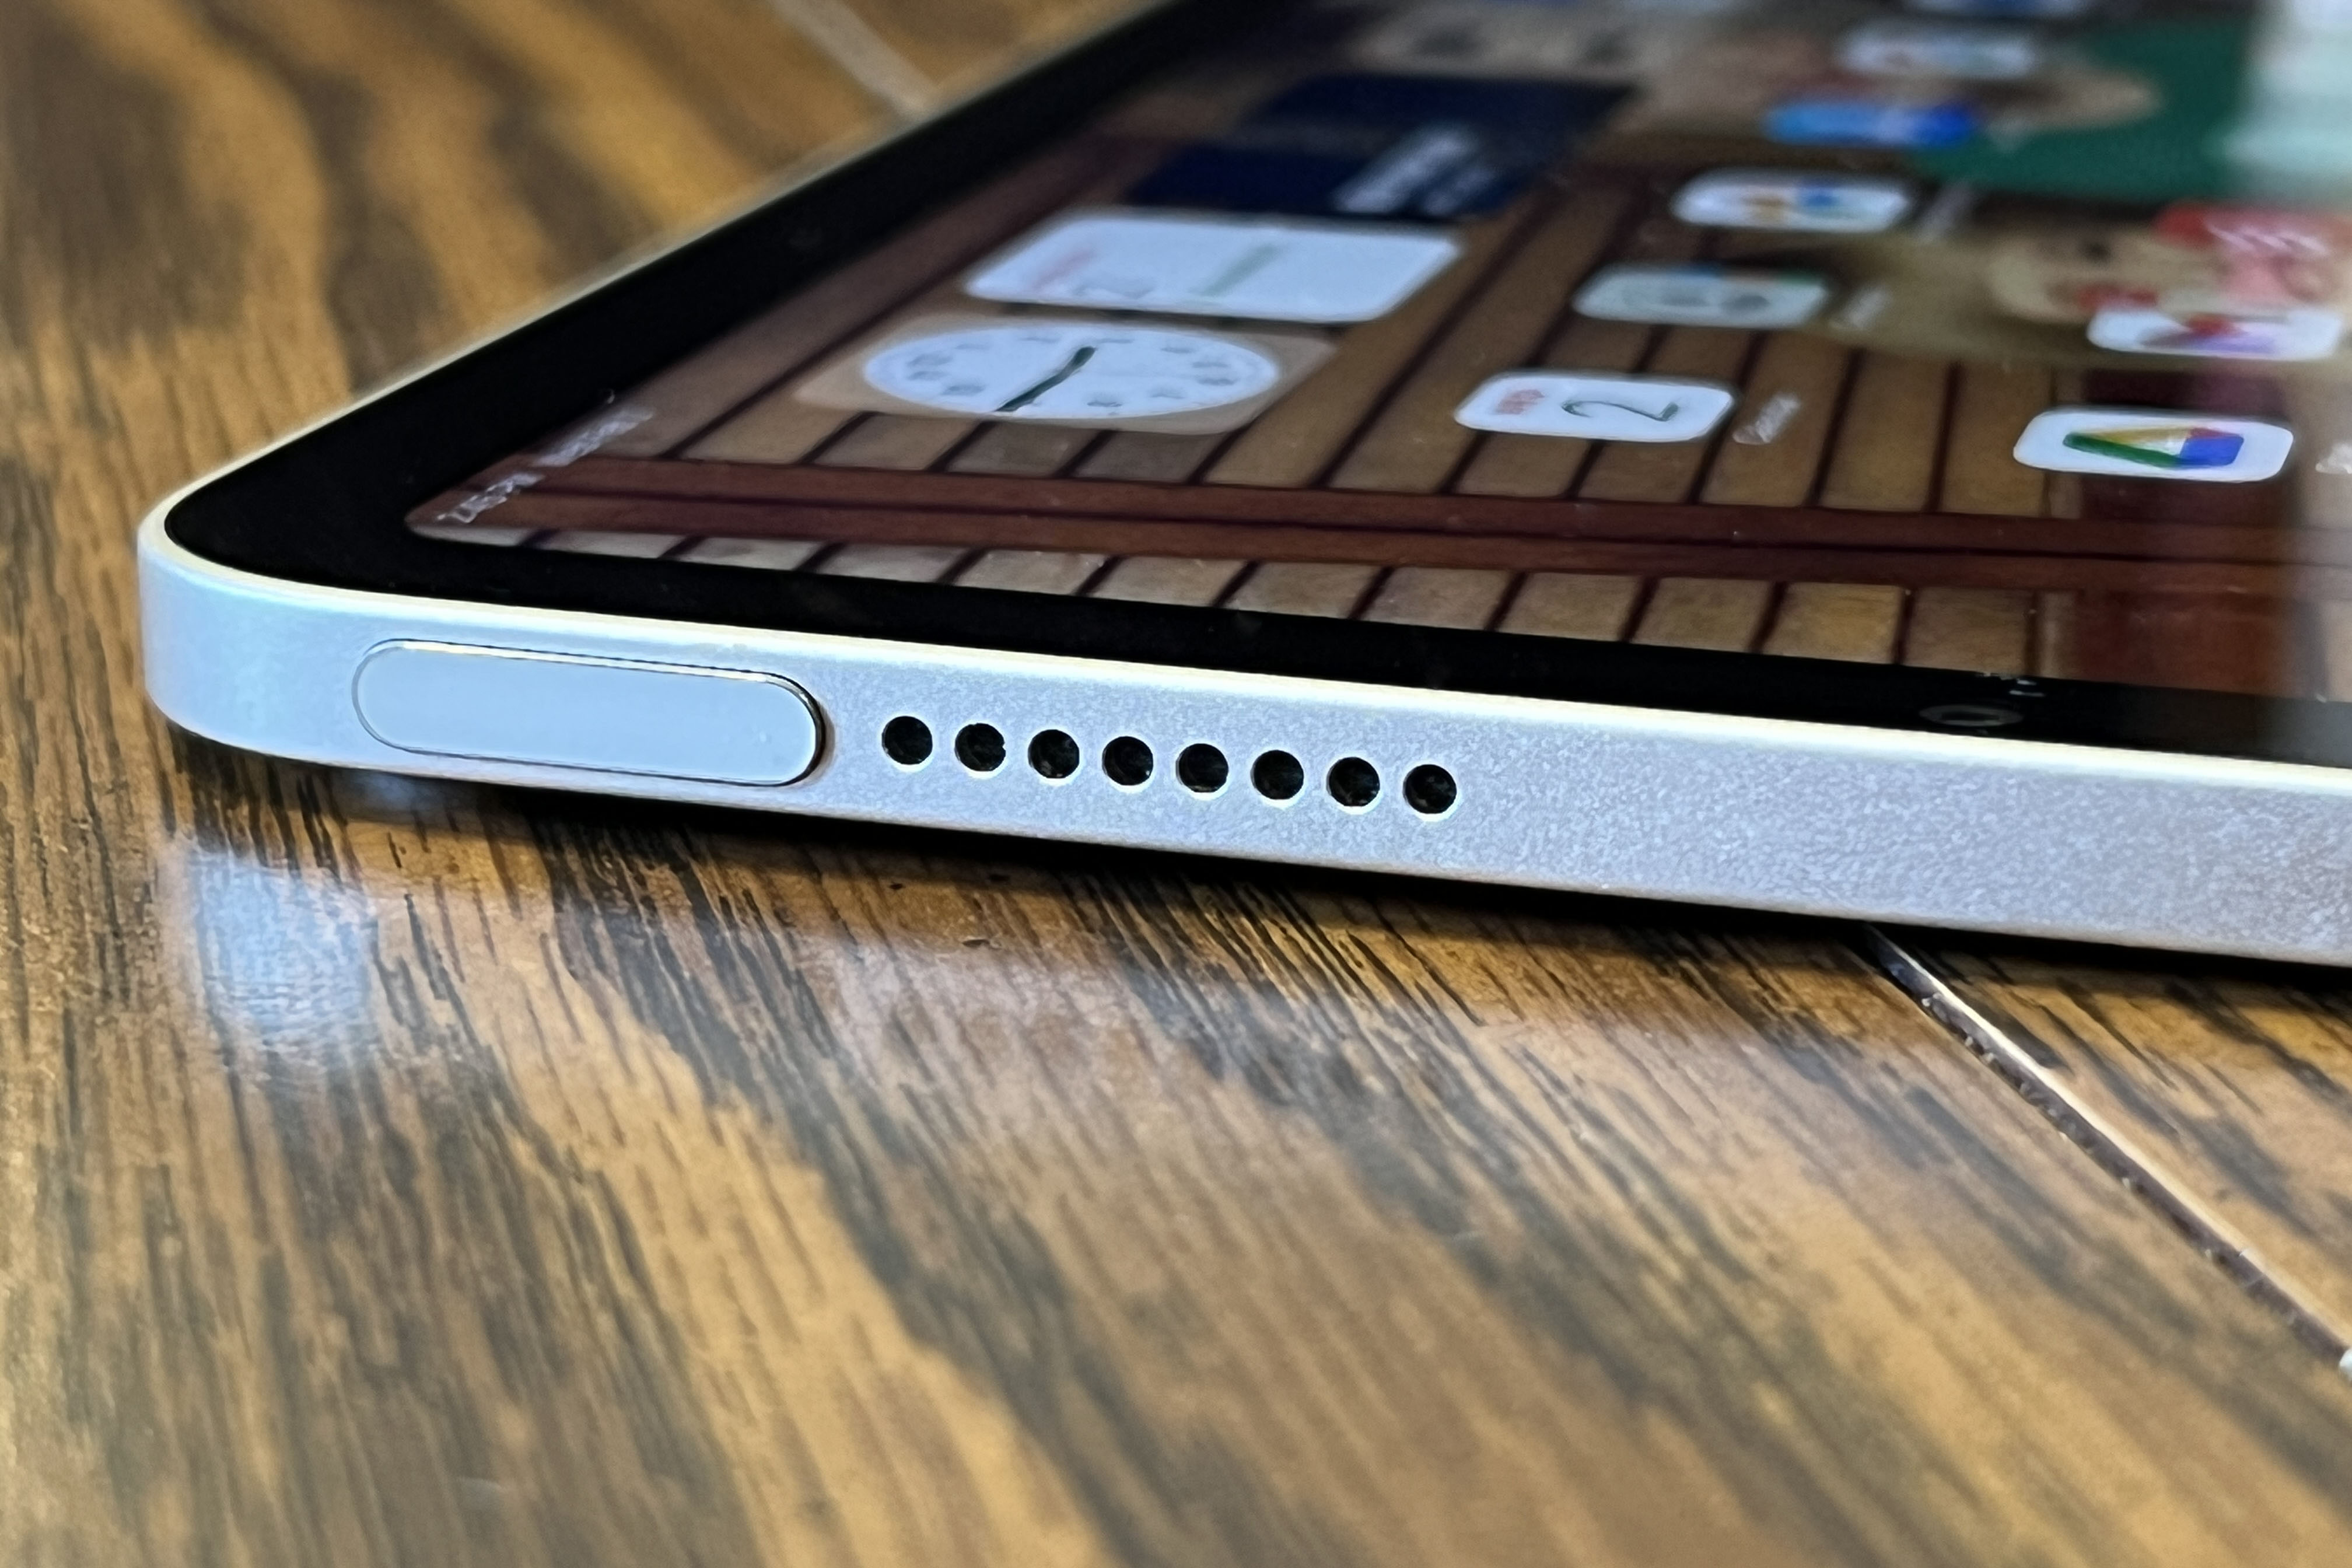 Das iPad mini besteht zu 100 % aus recyceltem Aluminium.